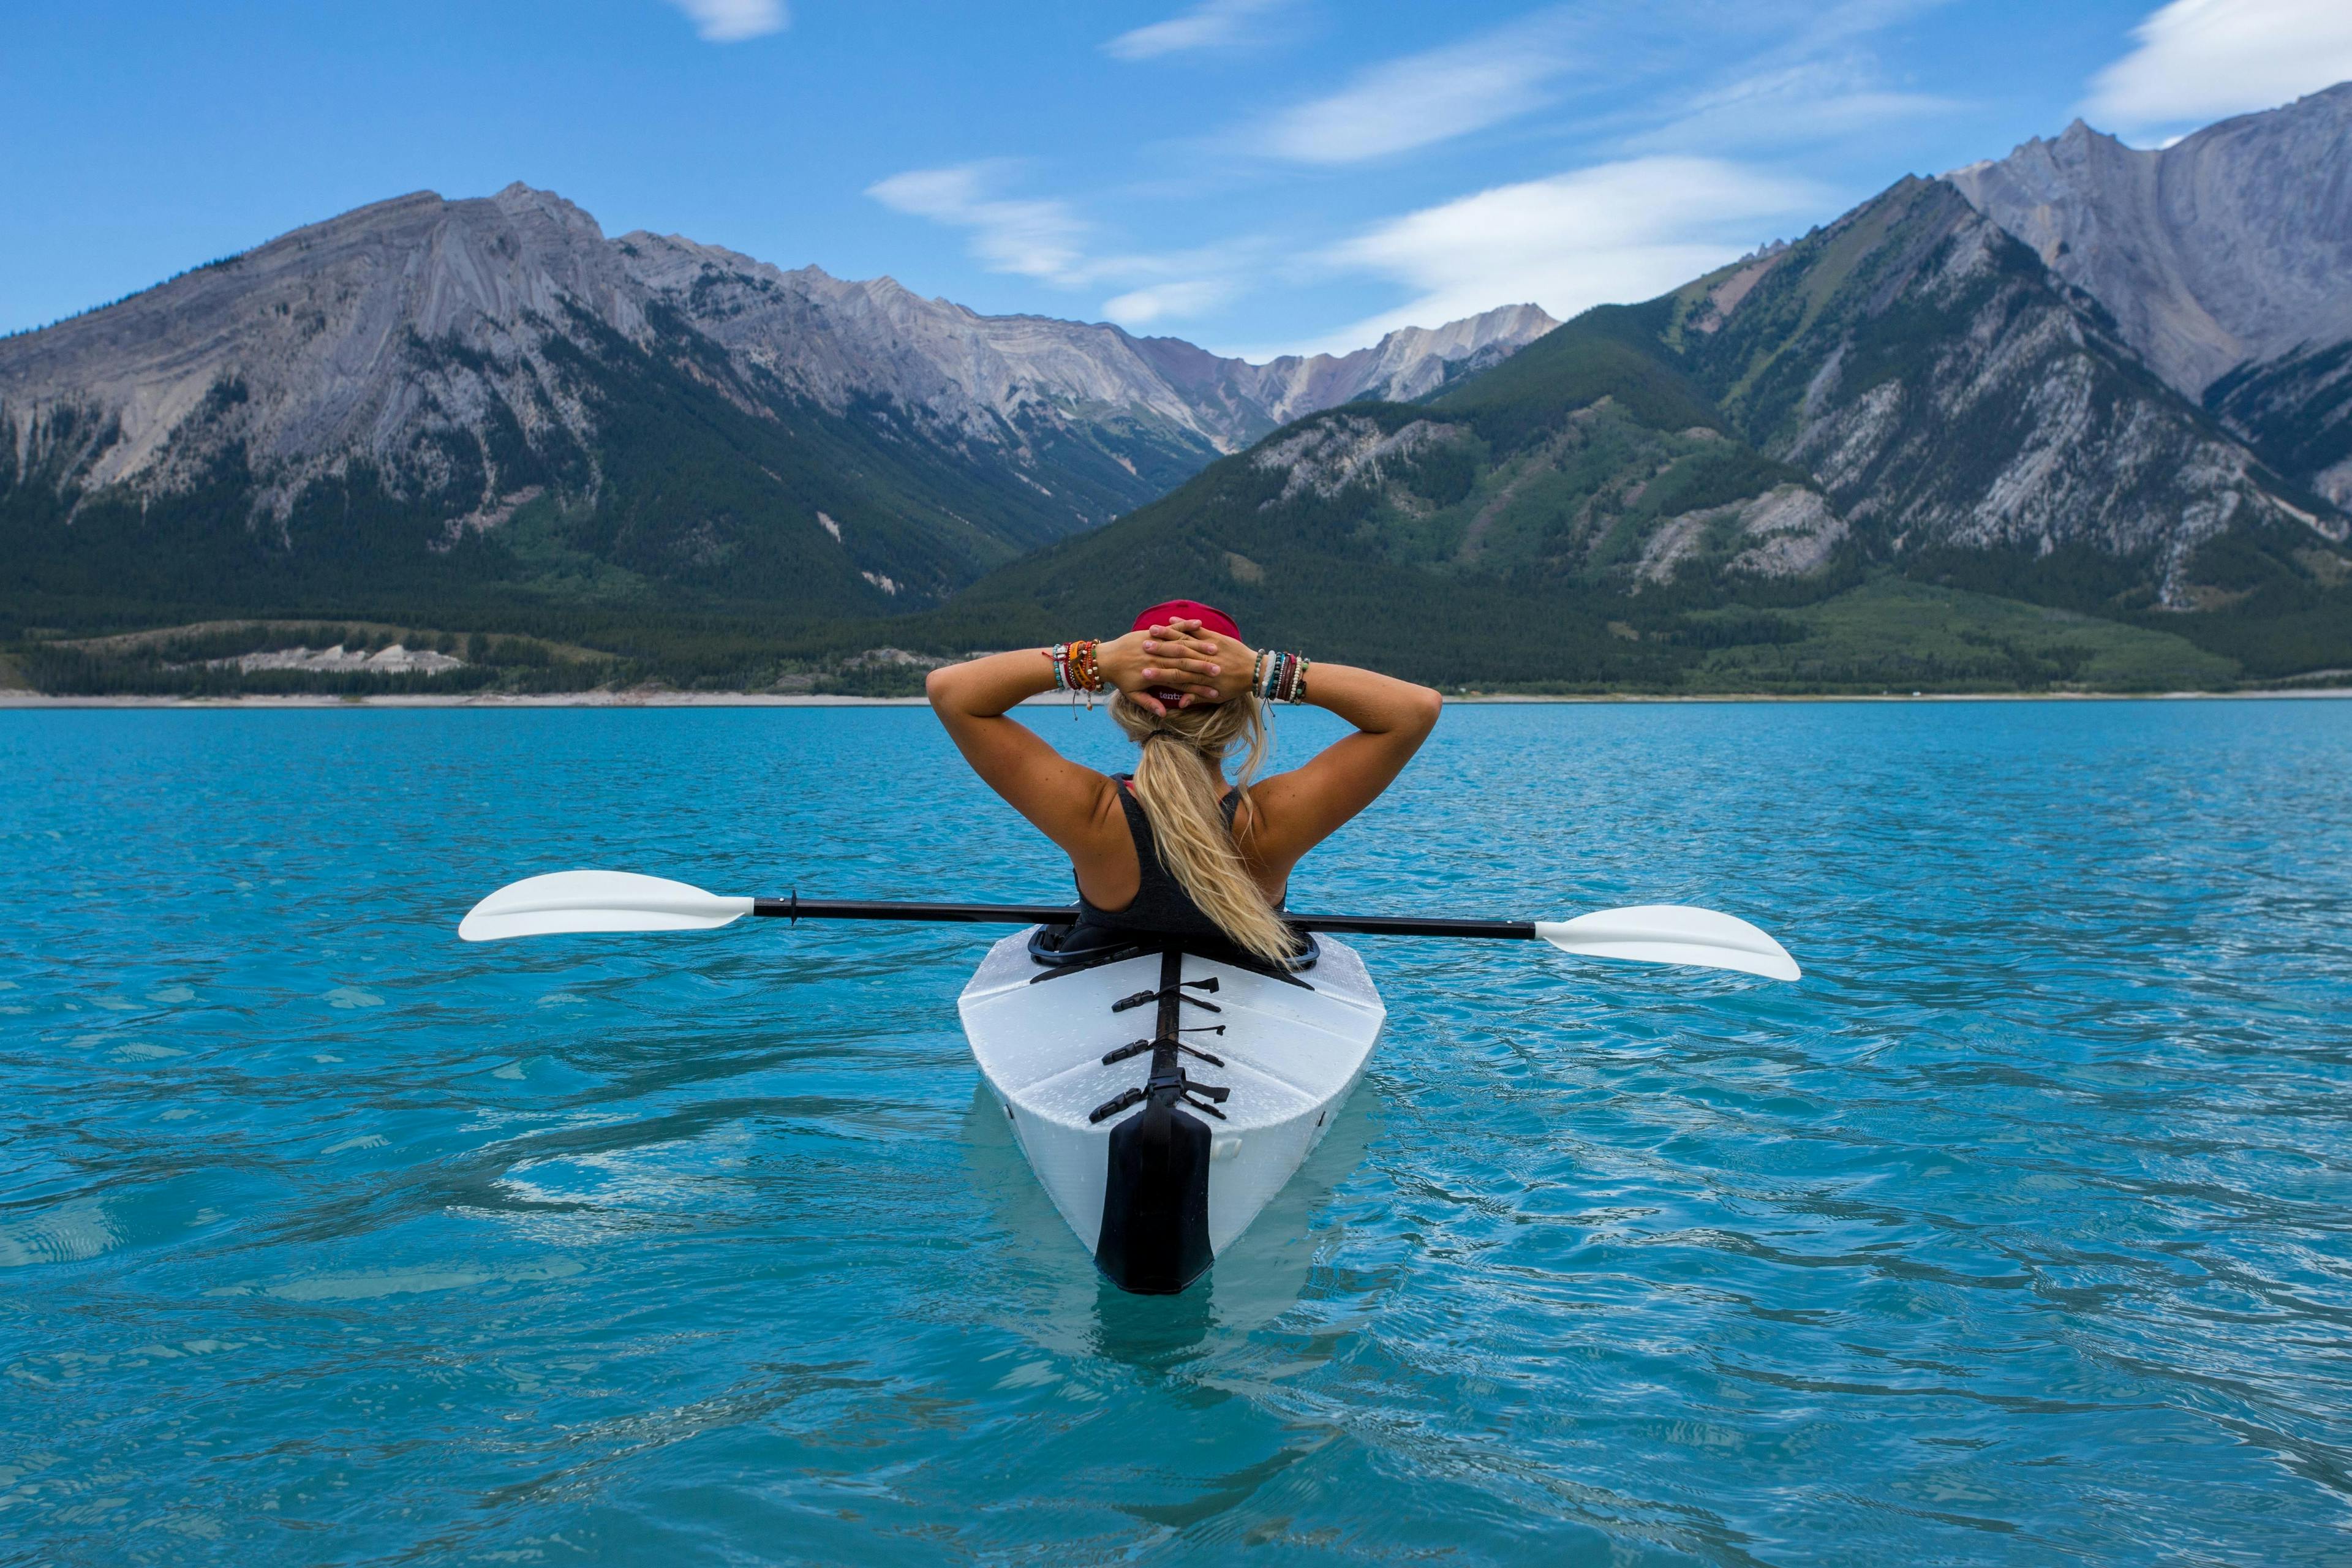 Woman kayaking on a lake next to mountains